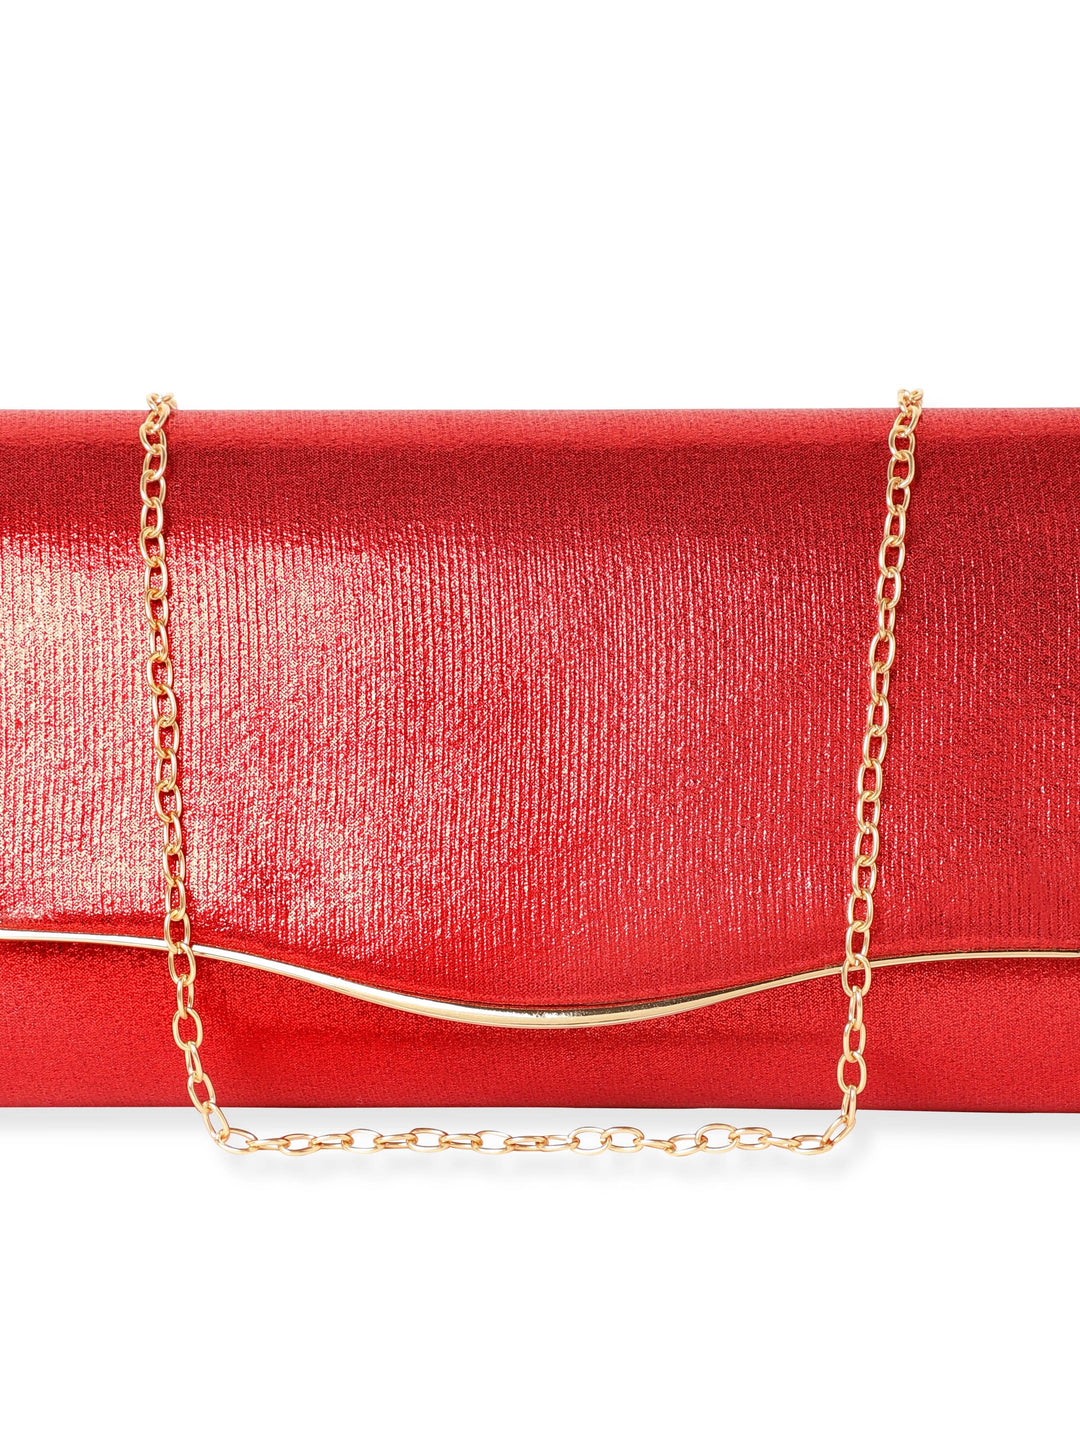 Rubans Fiery Opulence Red Textured Glossy Clutch Bag Handbag, Wallet Accessories & Clutches